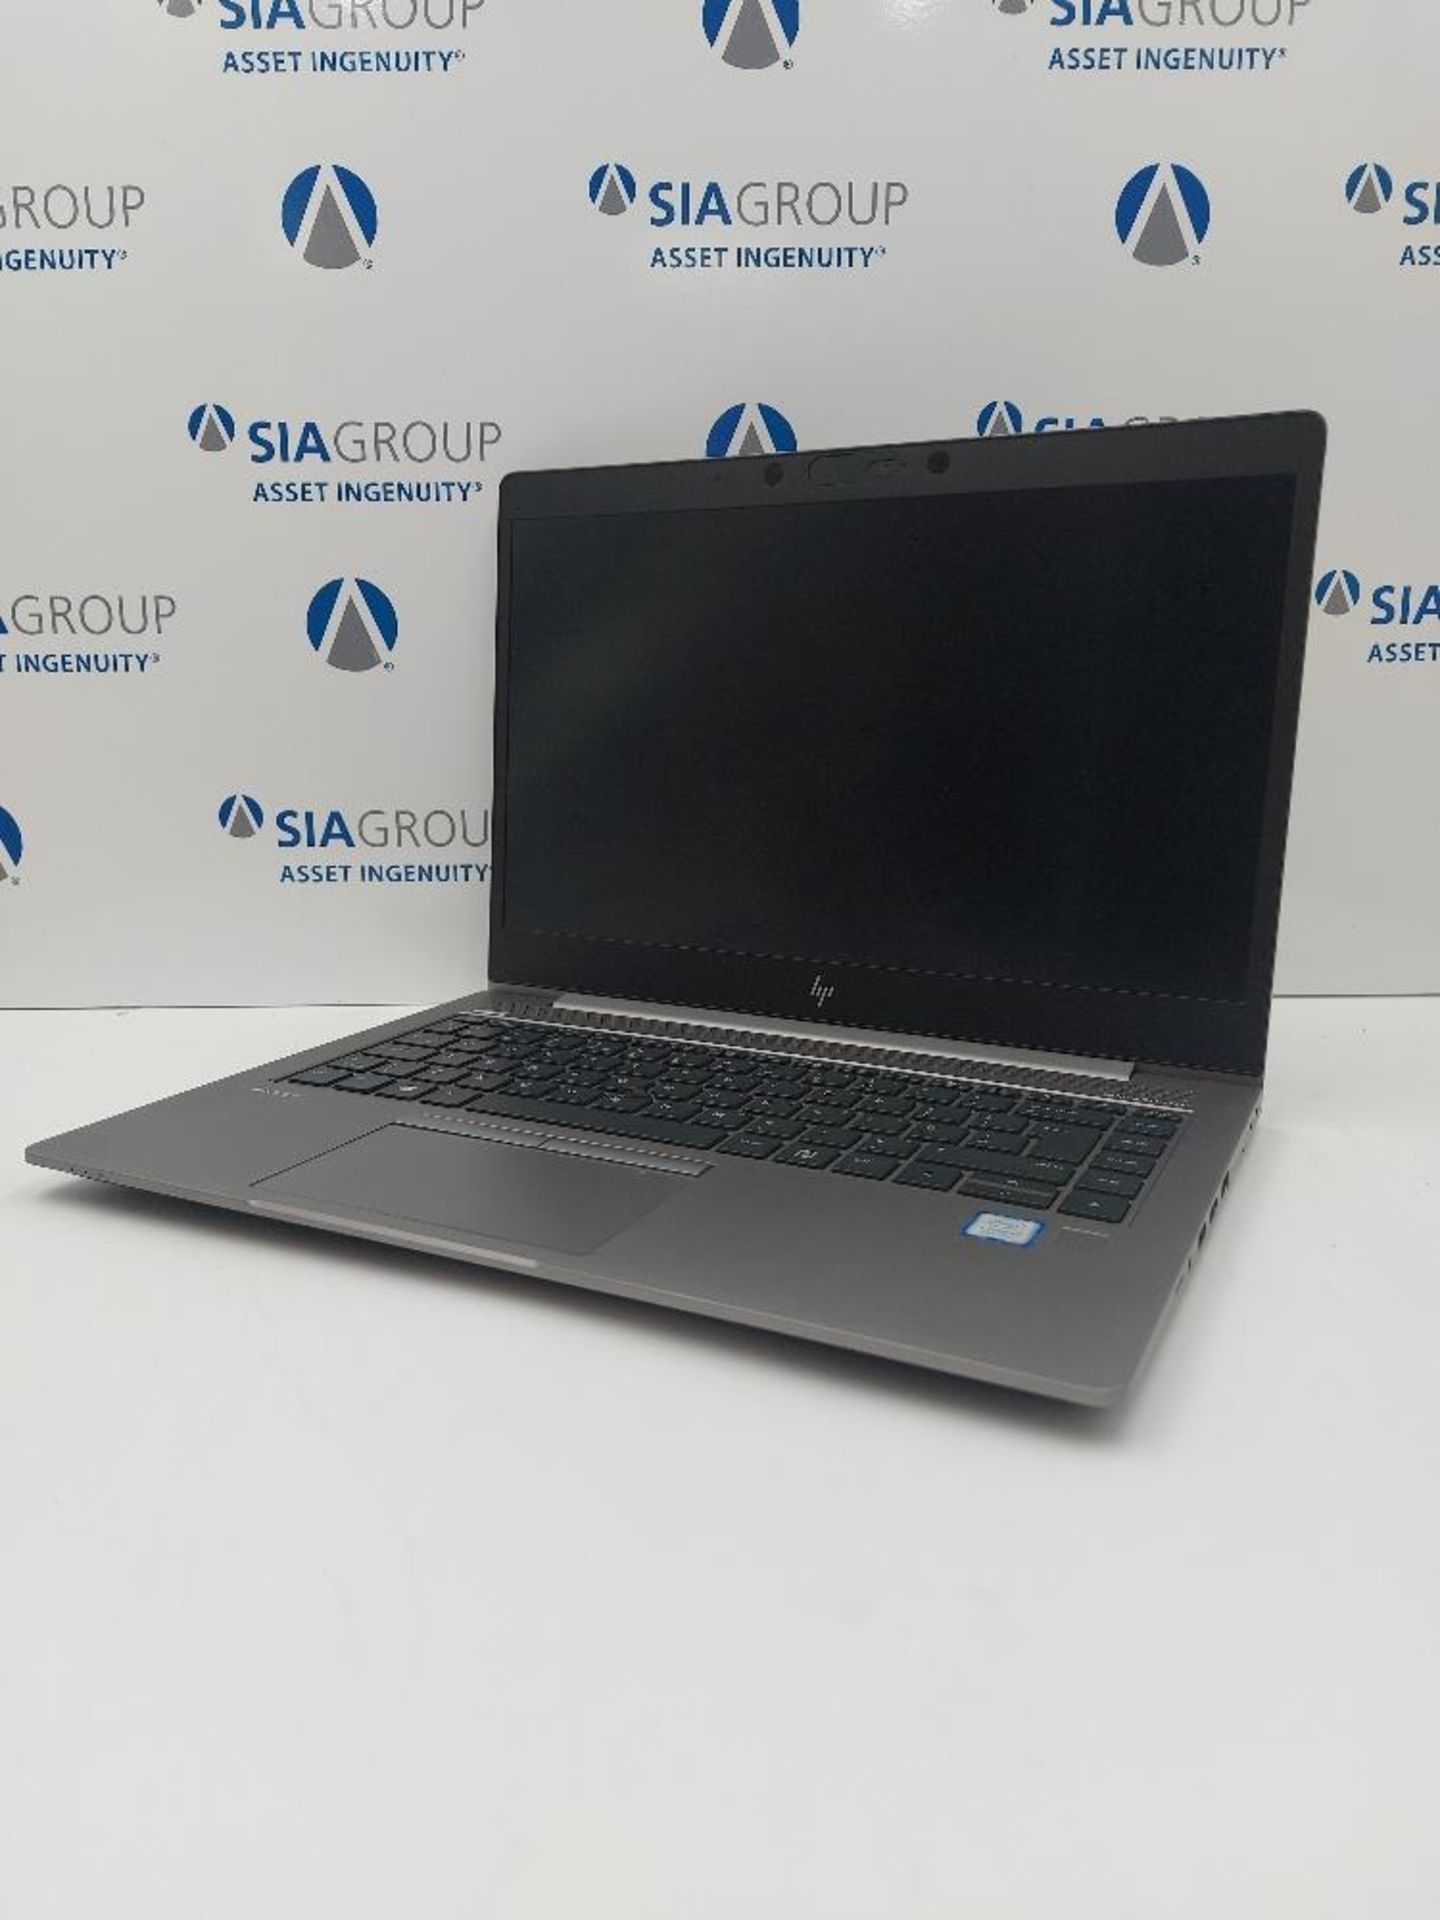 HP Zbook 14u G5 Laptop with Flight Case - Image 2 of 7